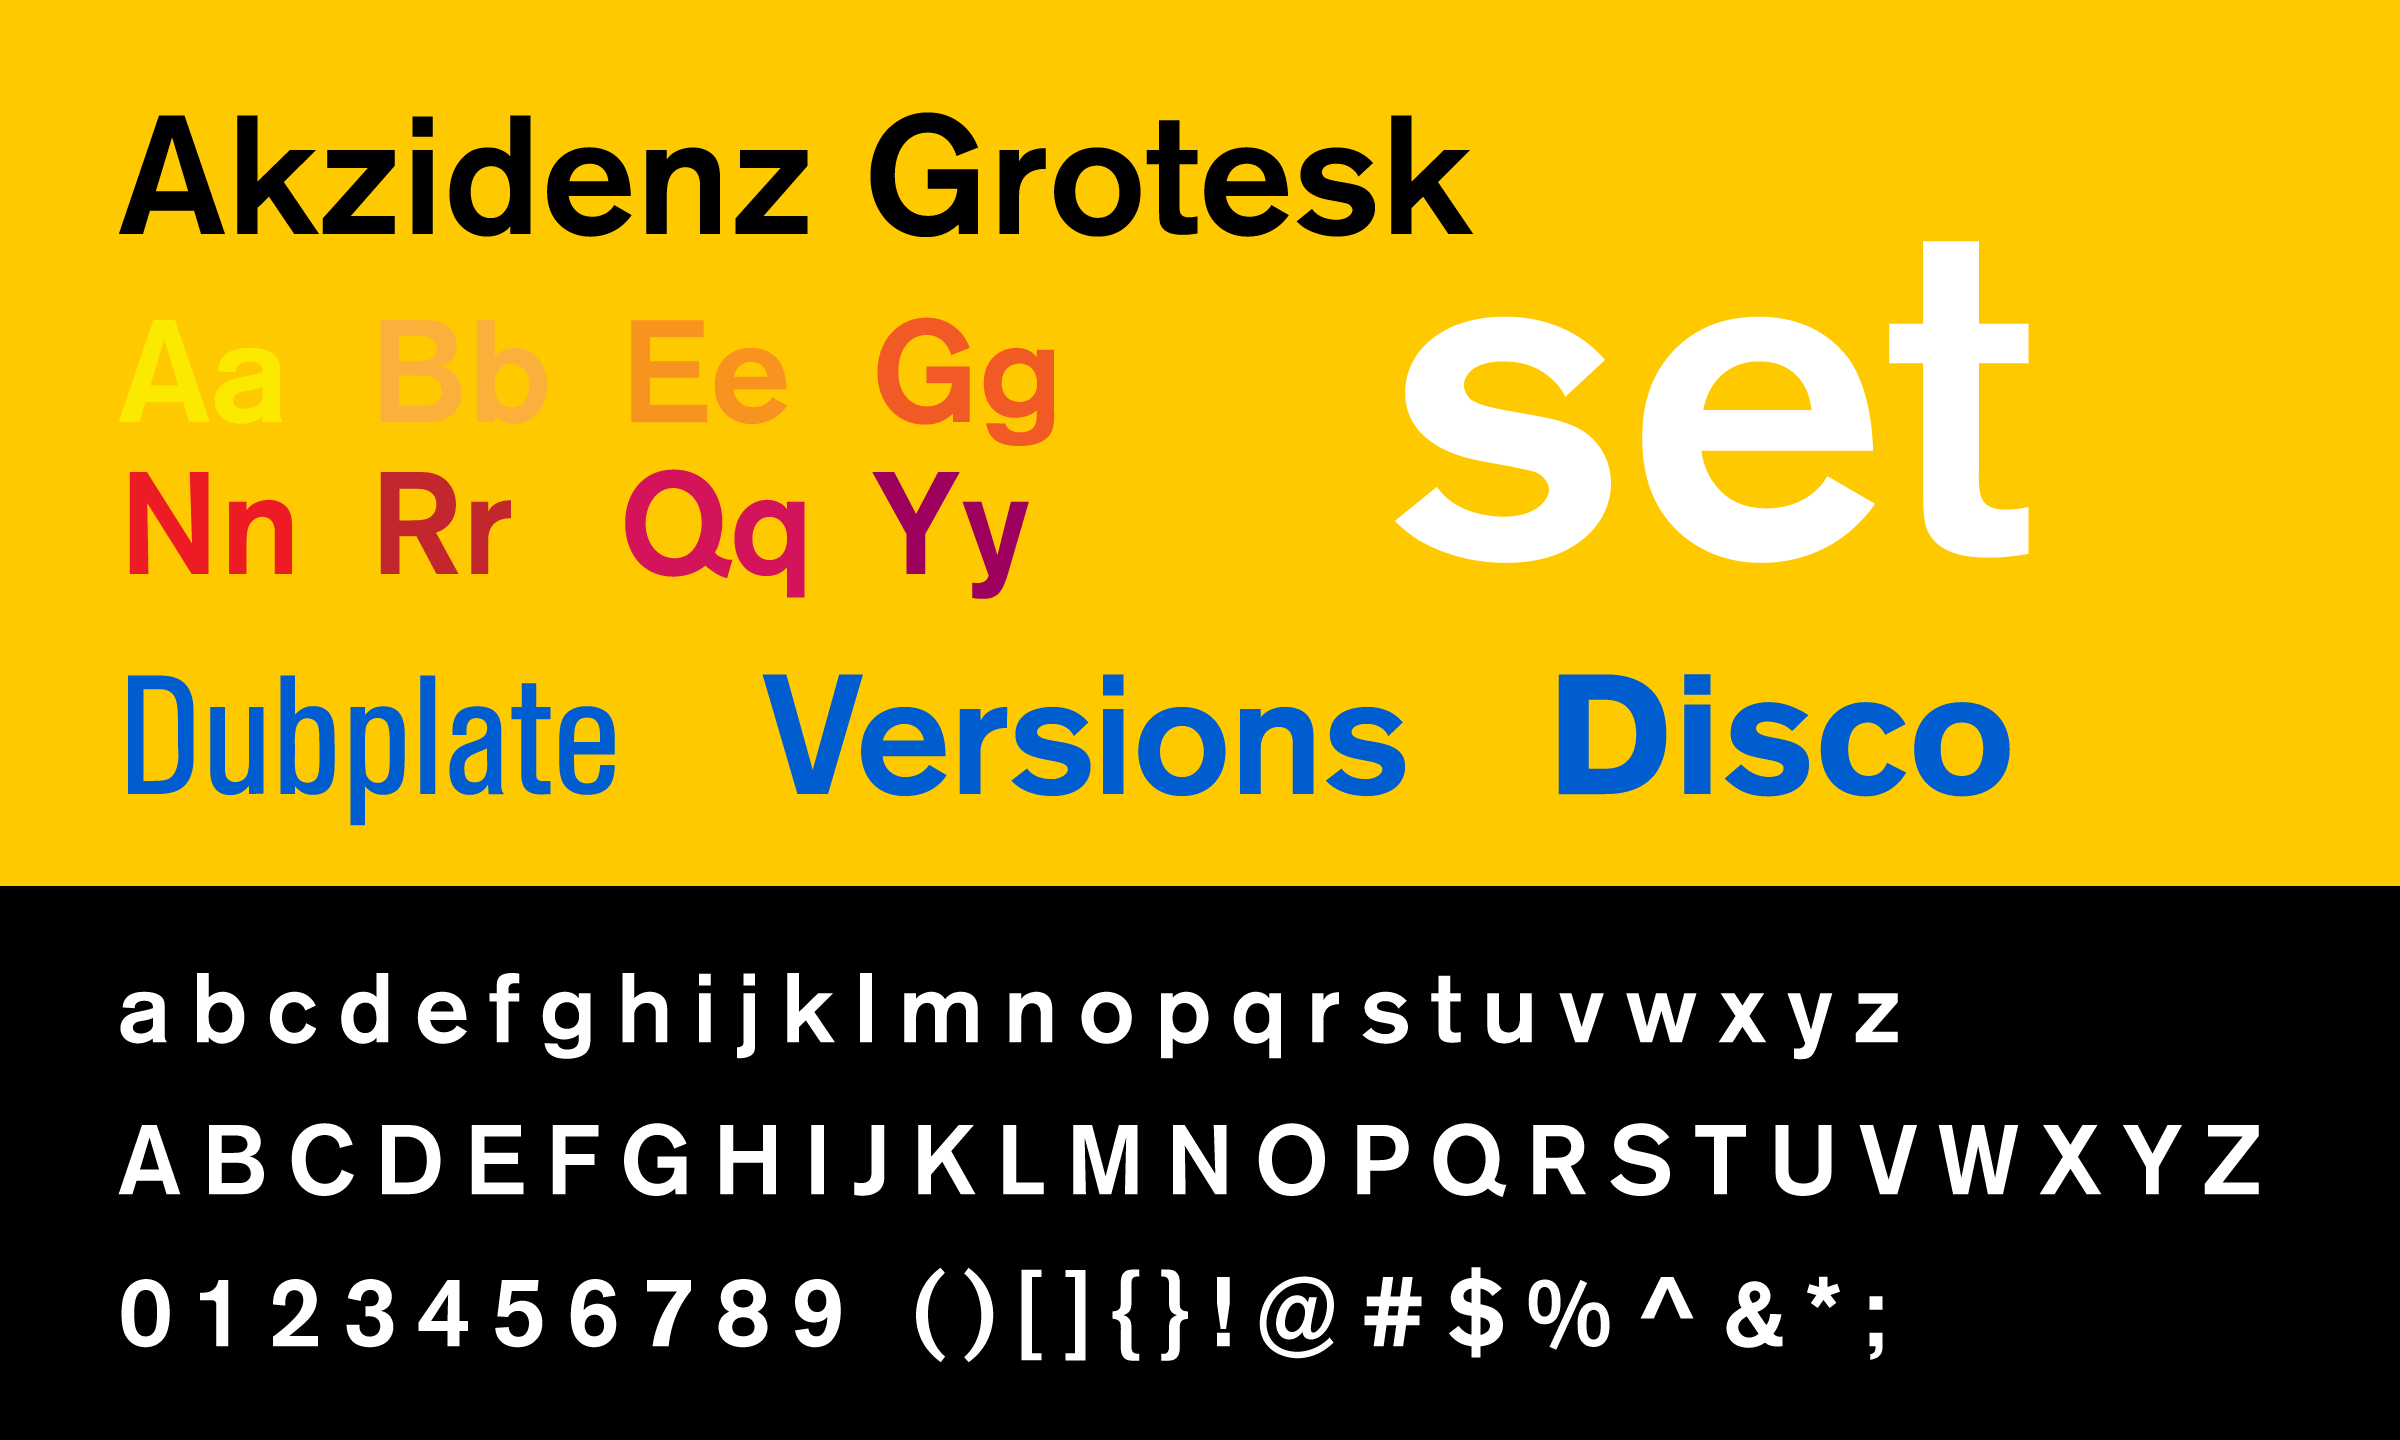 Akzidenz Grotesk typeface specimen sheet